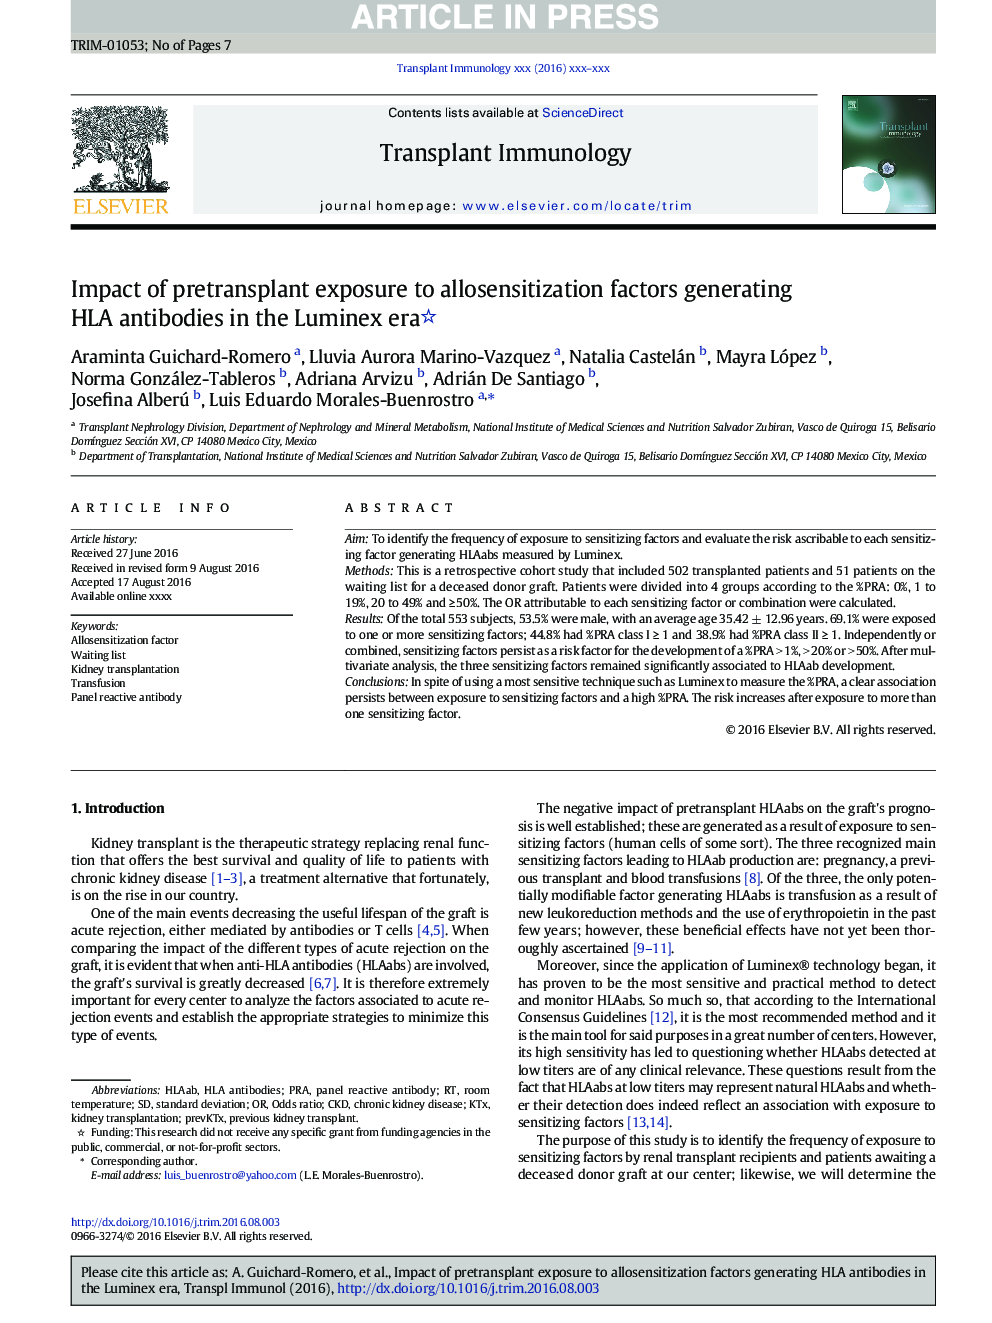 Impact of pretransplant exposure to allosensitization factors generating HLA antibodies in the Luminex era